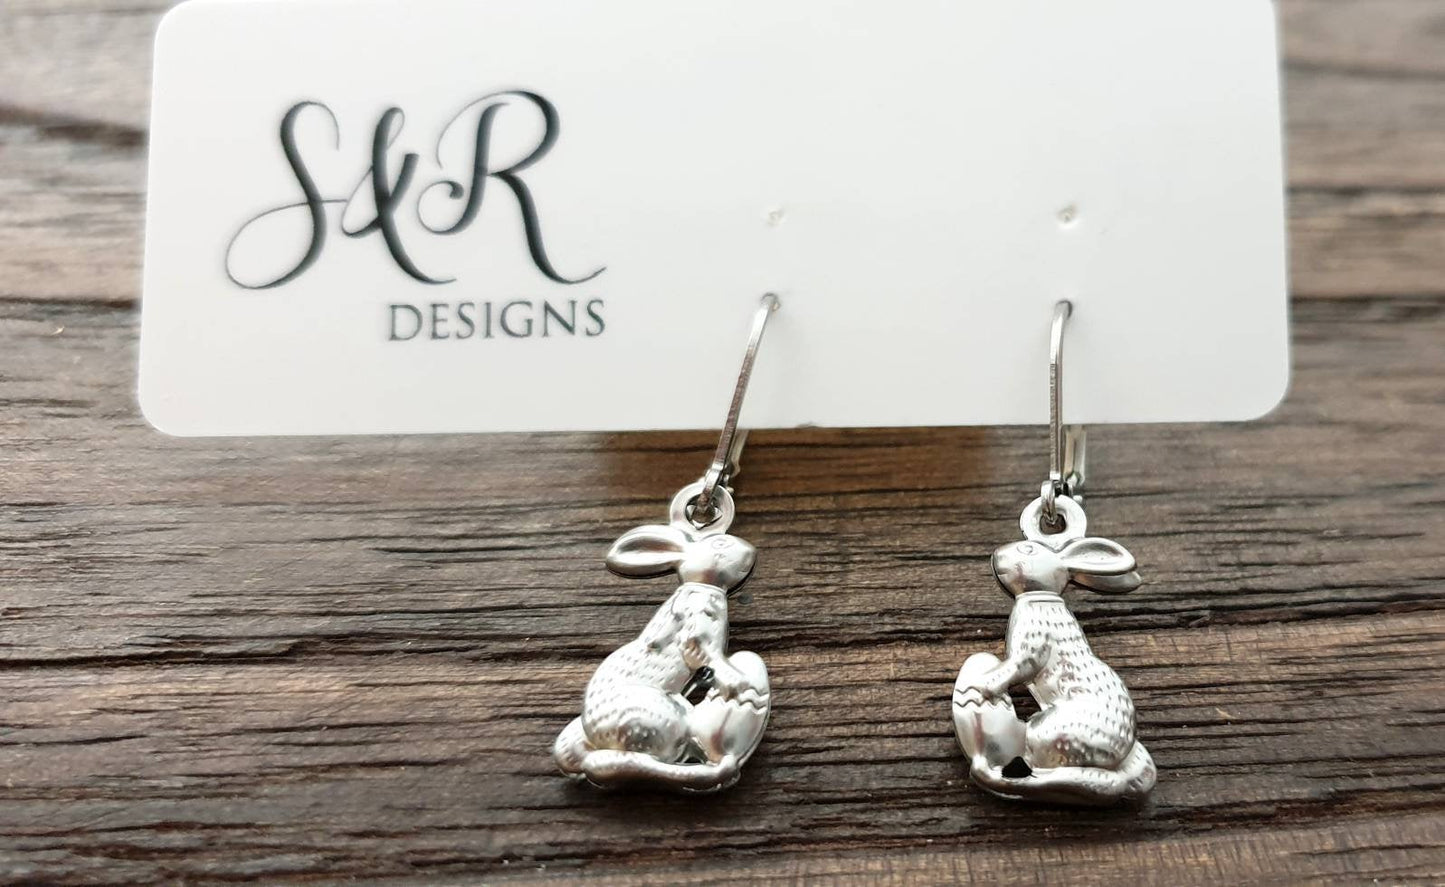 Easter Bunny Leverback Earrings, Stainless Steel Dangle Leverback or Hook Earrings.